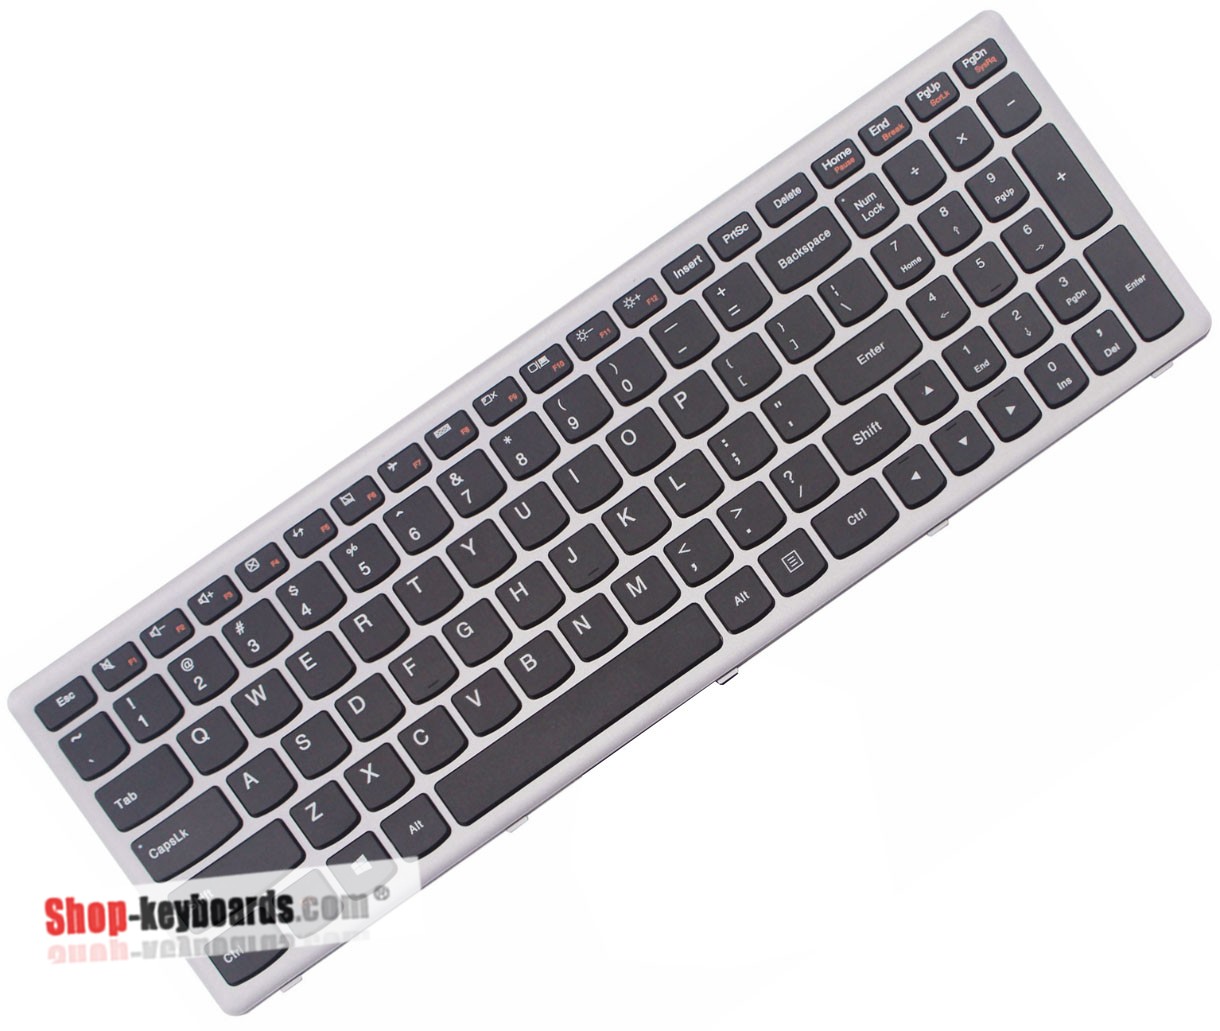 Lenovo P500 Keyboard replacement